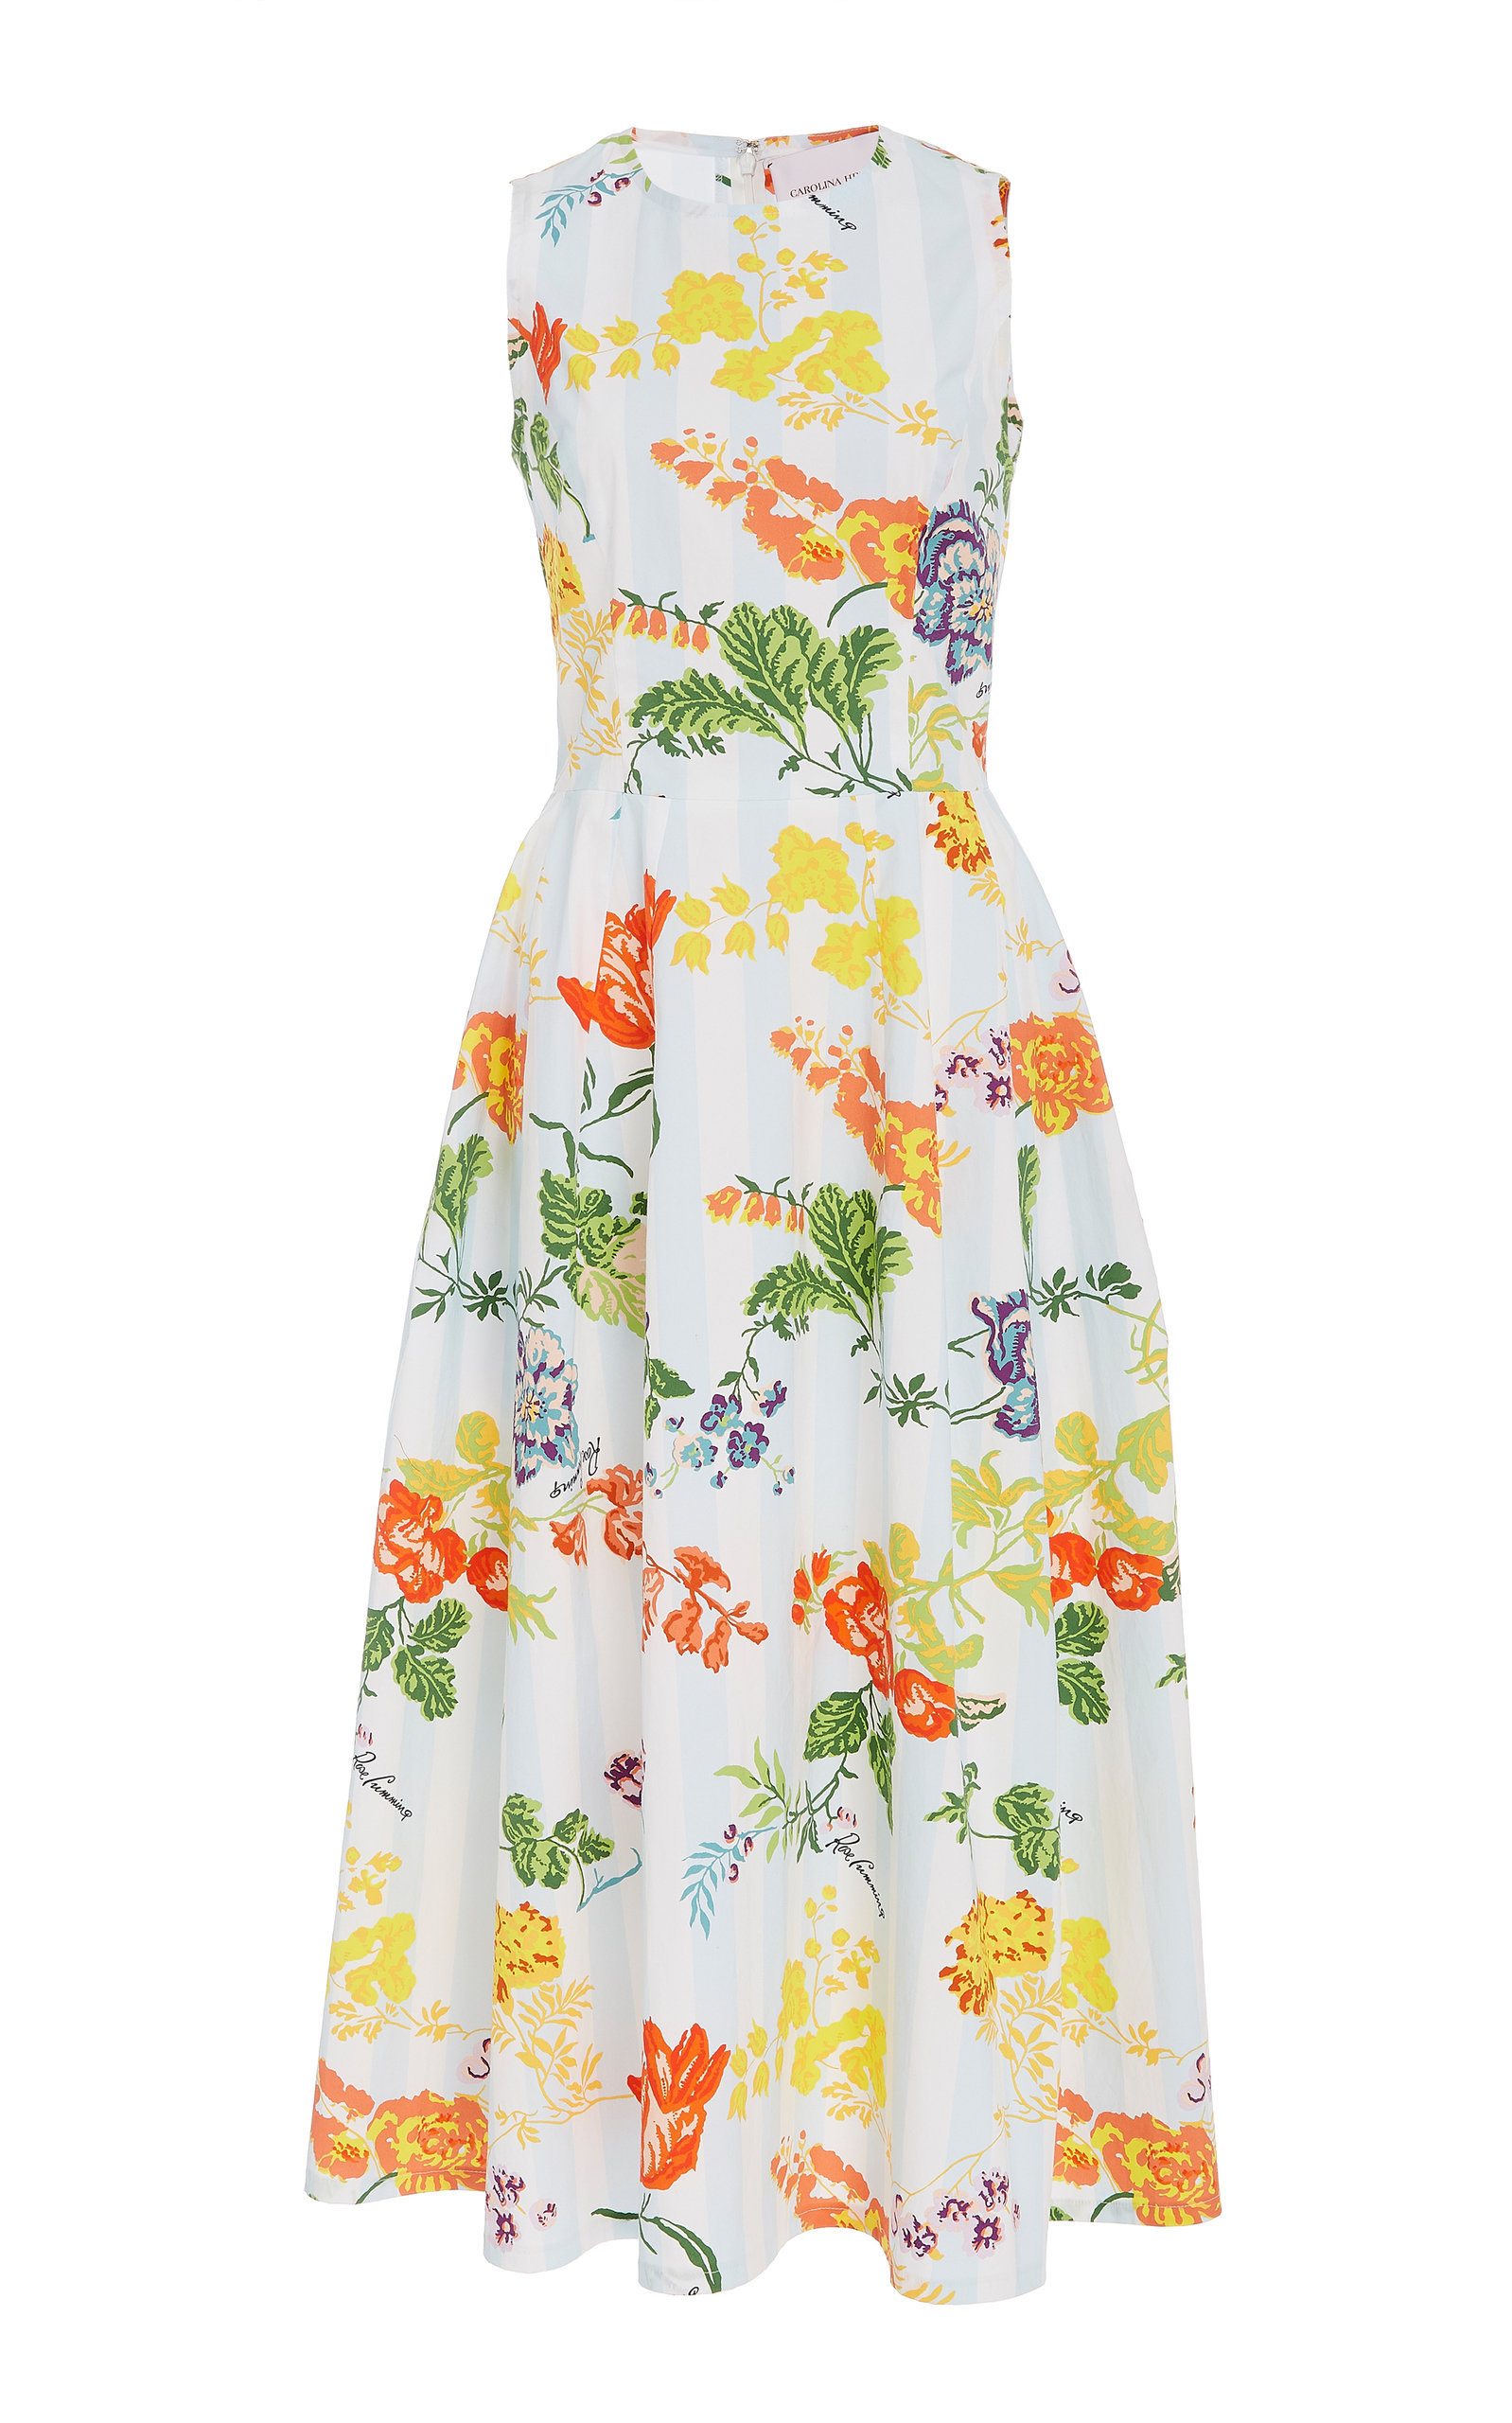 Bloom Floral Stripe Cotton Sleeveless A Line Dress, $1,490